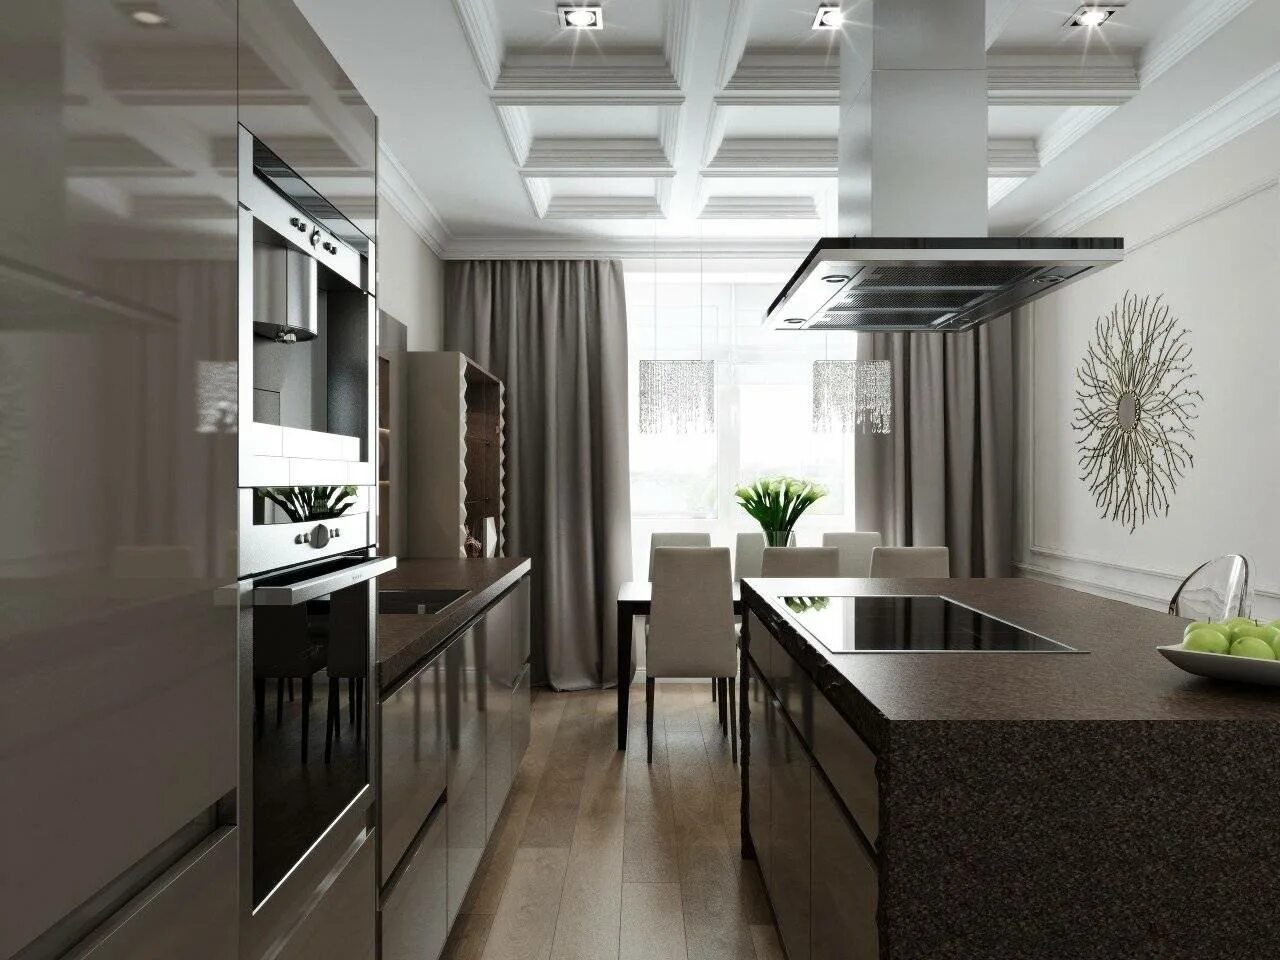 Дизайн 3 х комнатной. Современный интерьер трехкомнатной квартиры. Трехкомнатная квартира в современном стиле. Дизайнерские проекты квартир.